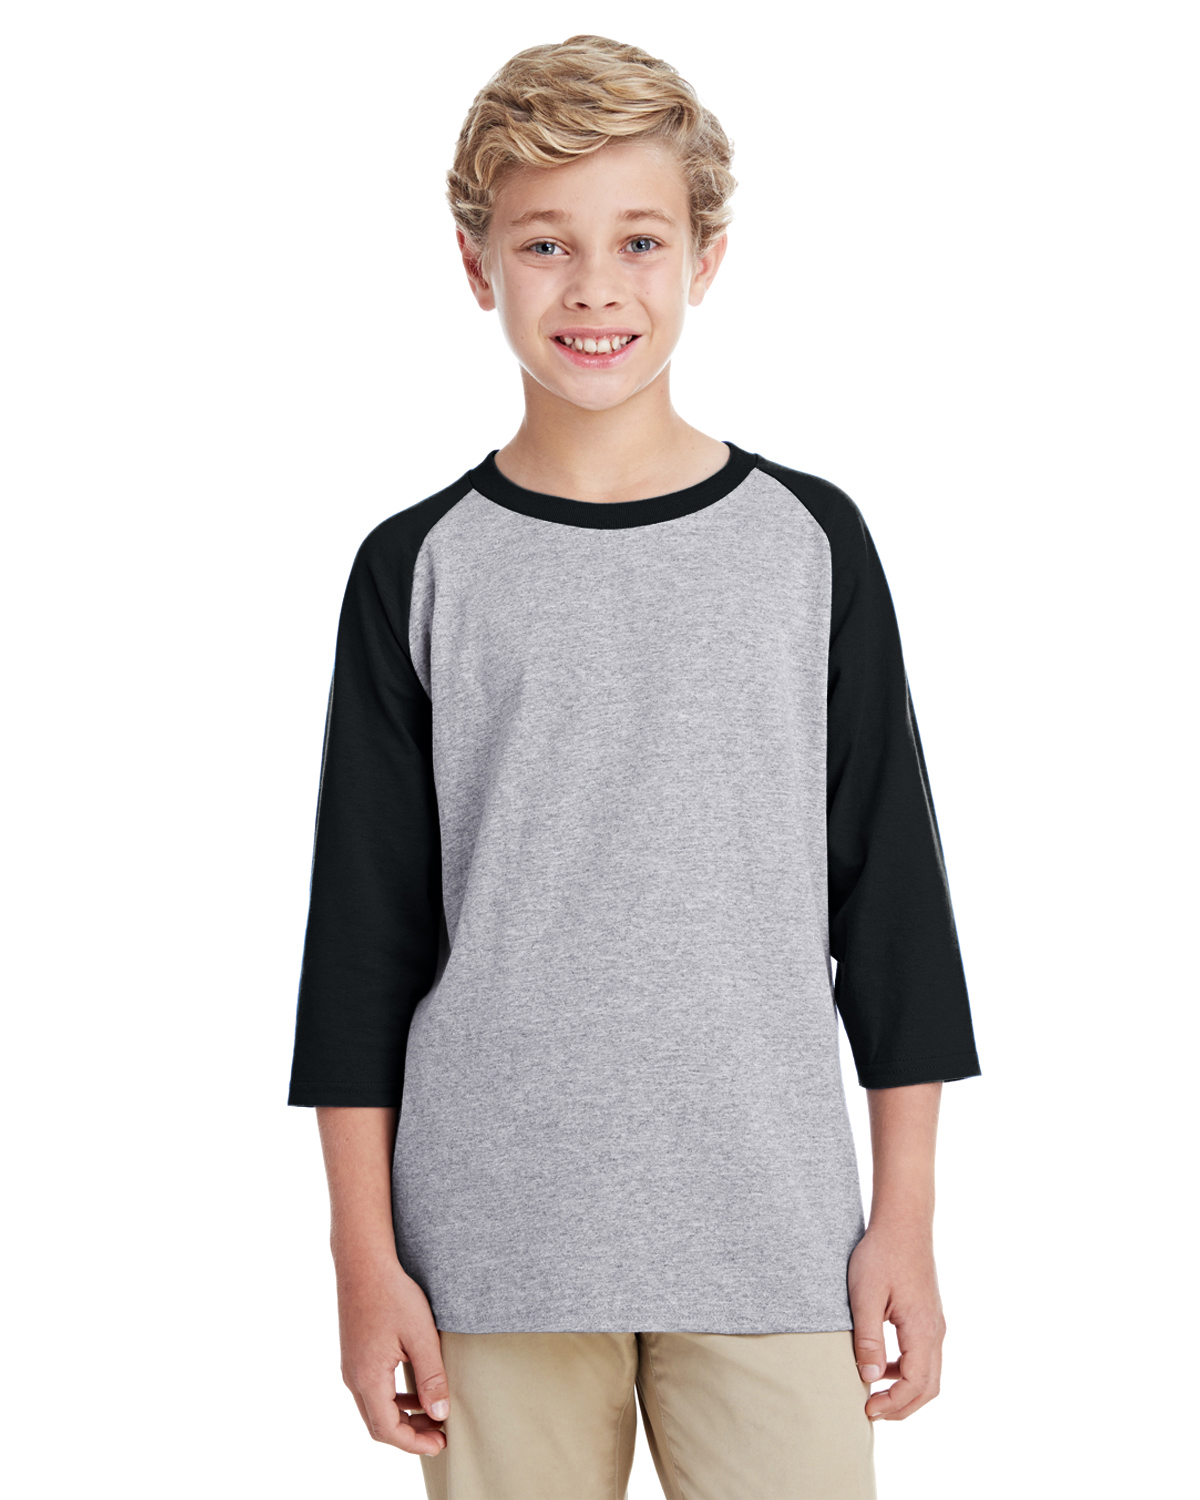 https://images.shirtspace.com/fullsize/fY%2FCSnhv2jgvLjXFv2qy7g%3D%3D/146816/7336-gildan-g570b-heavy-cotton-youth-3-4-sleeve-raglan-t-shirt-front-sport-gray-black.jpg